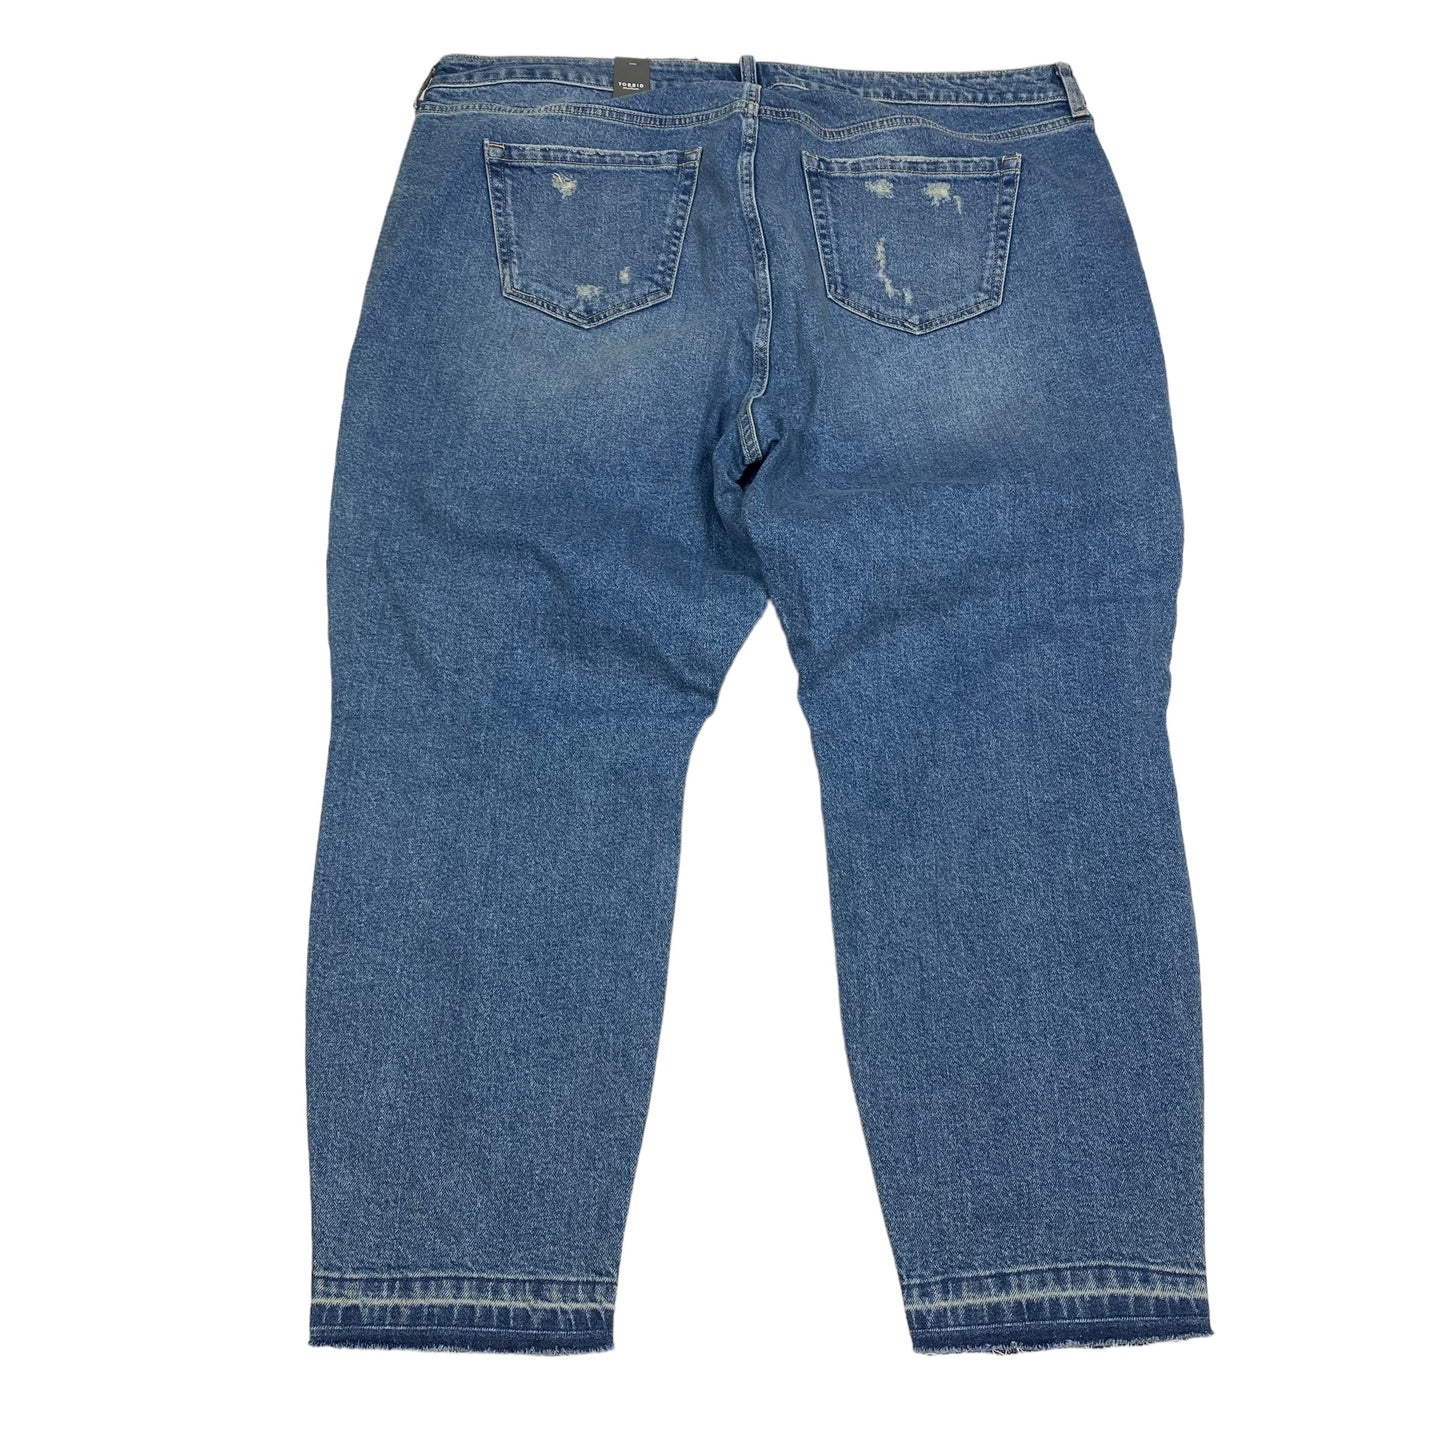 Blue Denim Jeans Boyfriend Torrid, Size 20